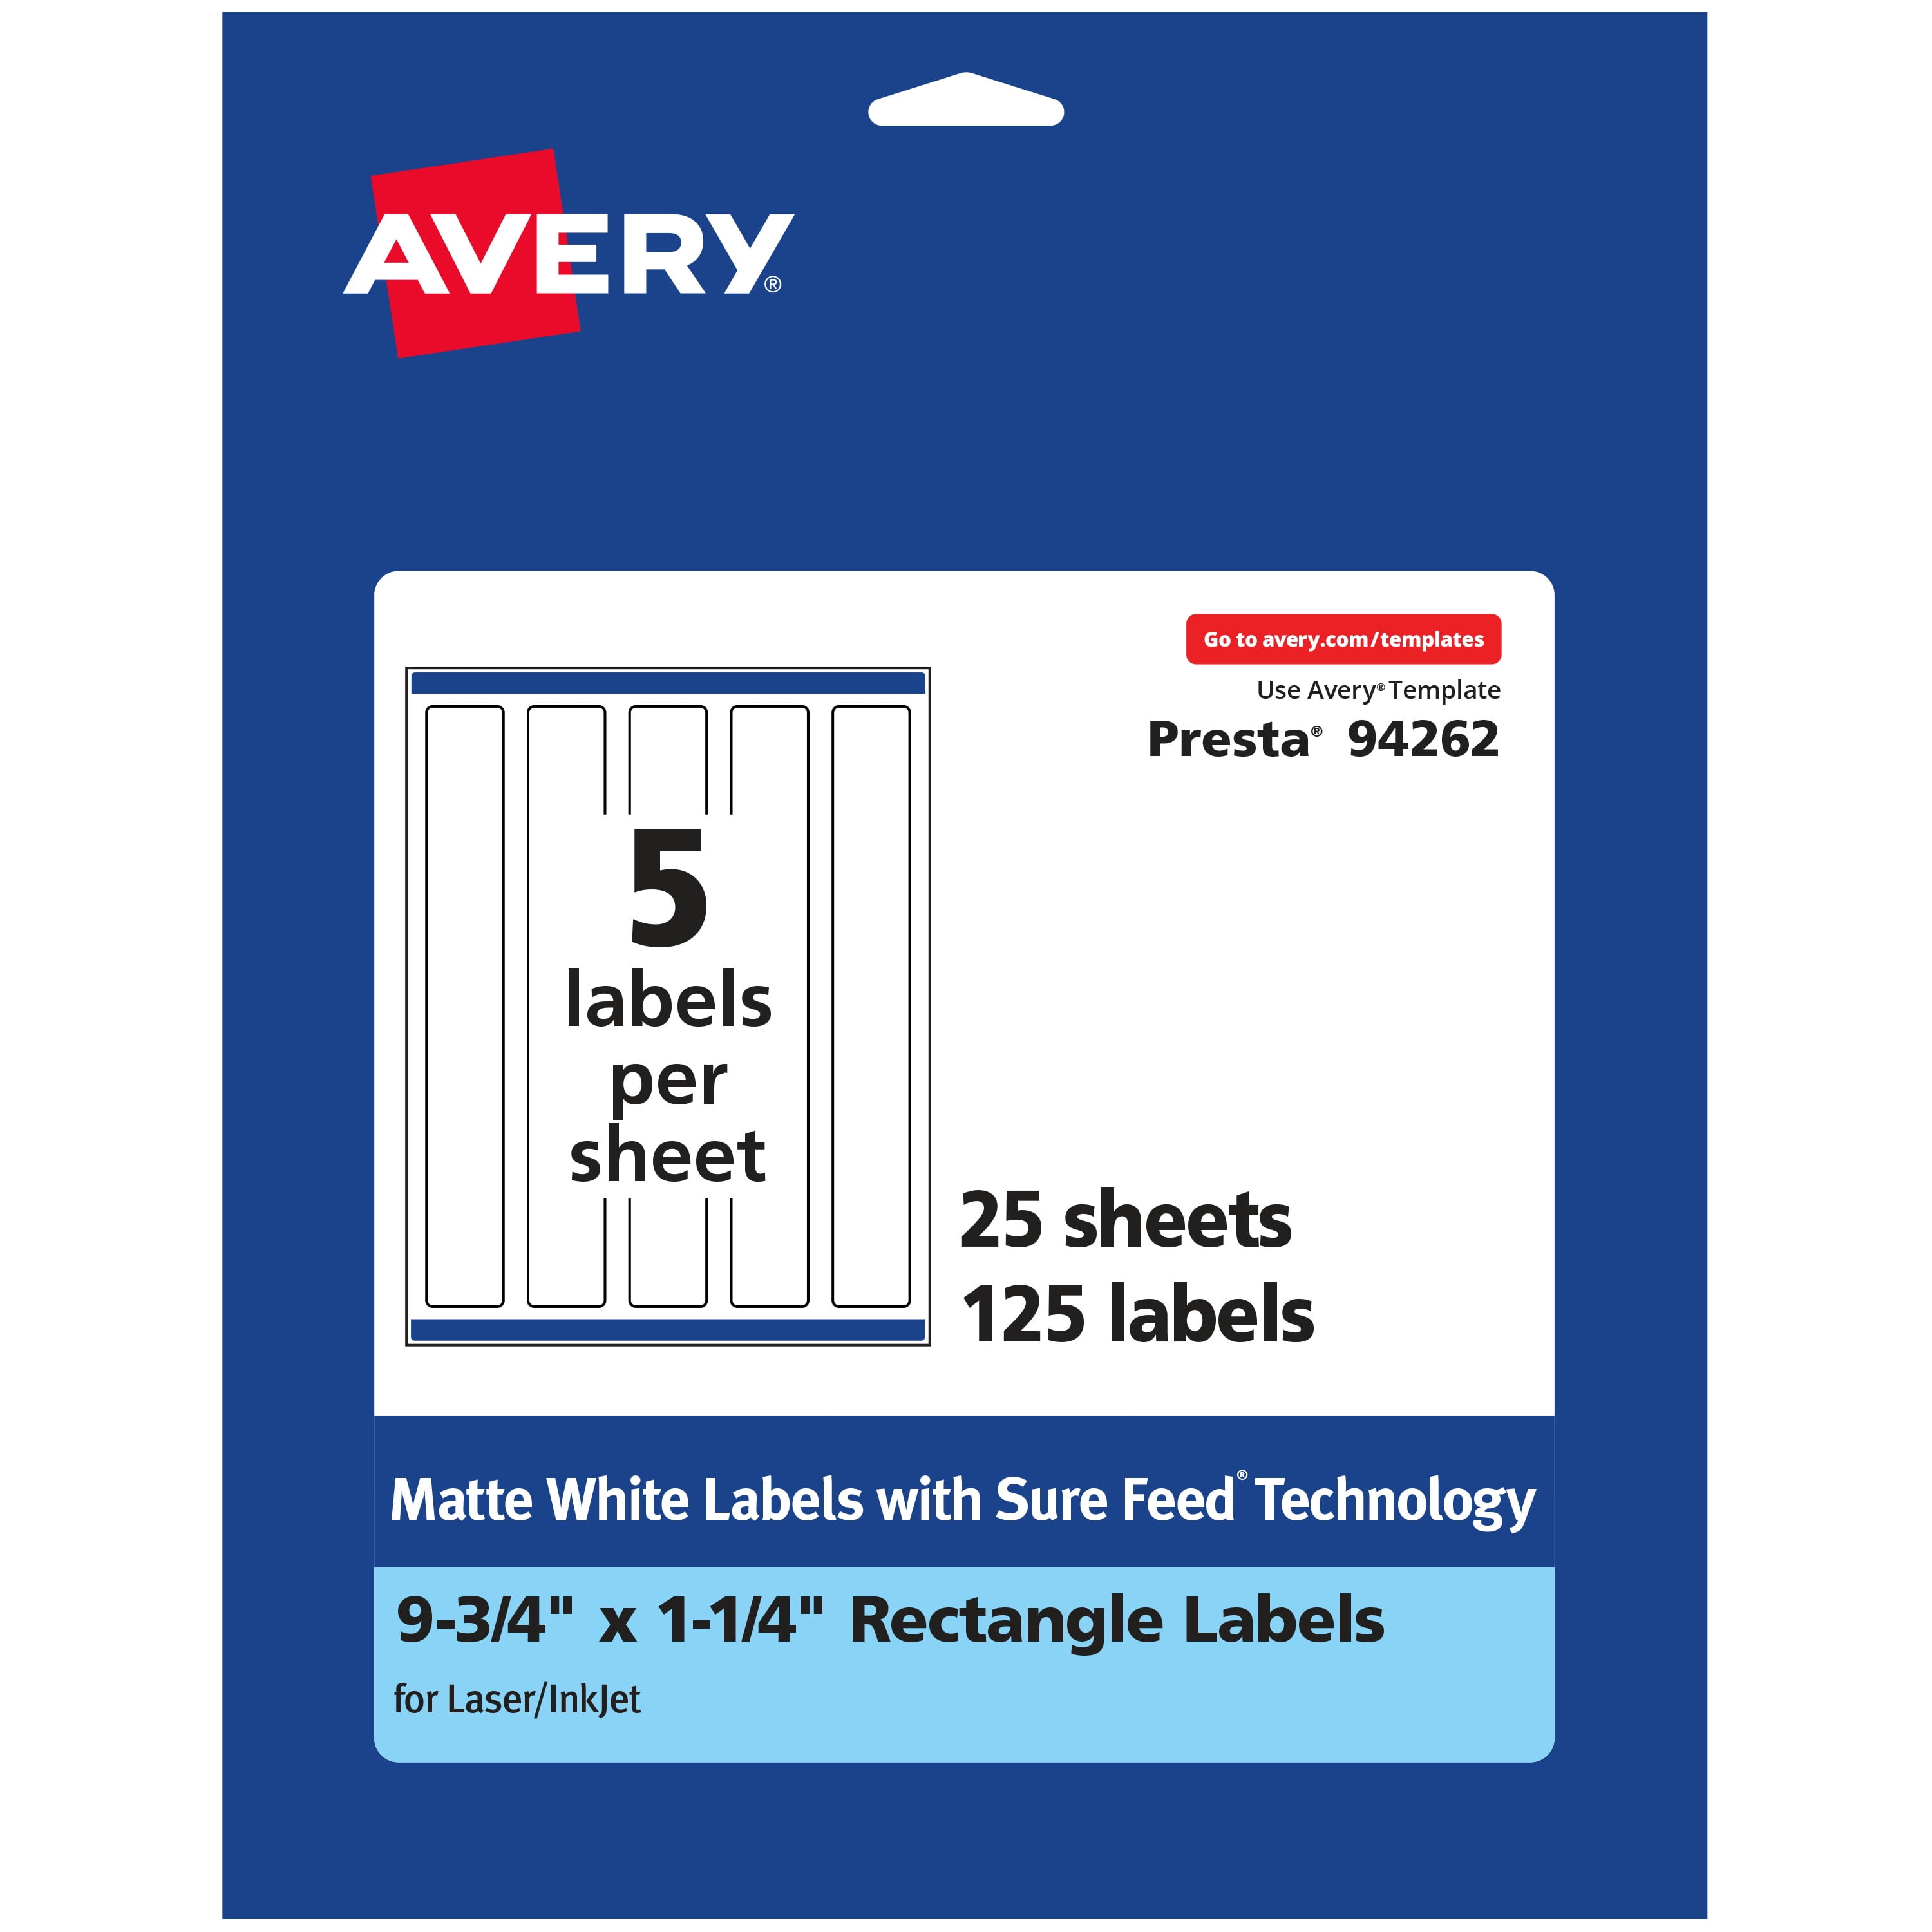 free-avery-templates-6450-wesla